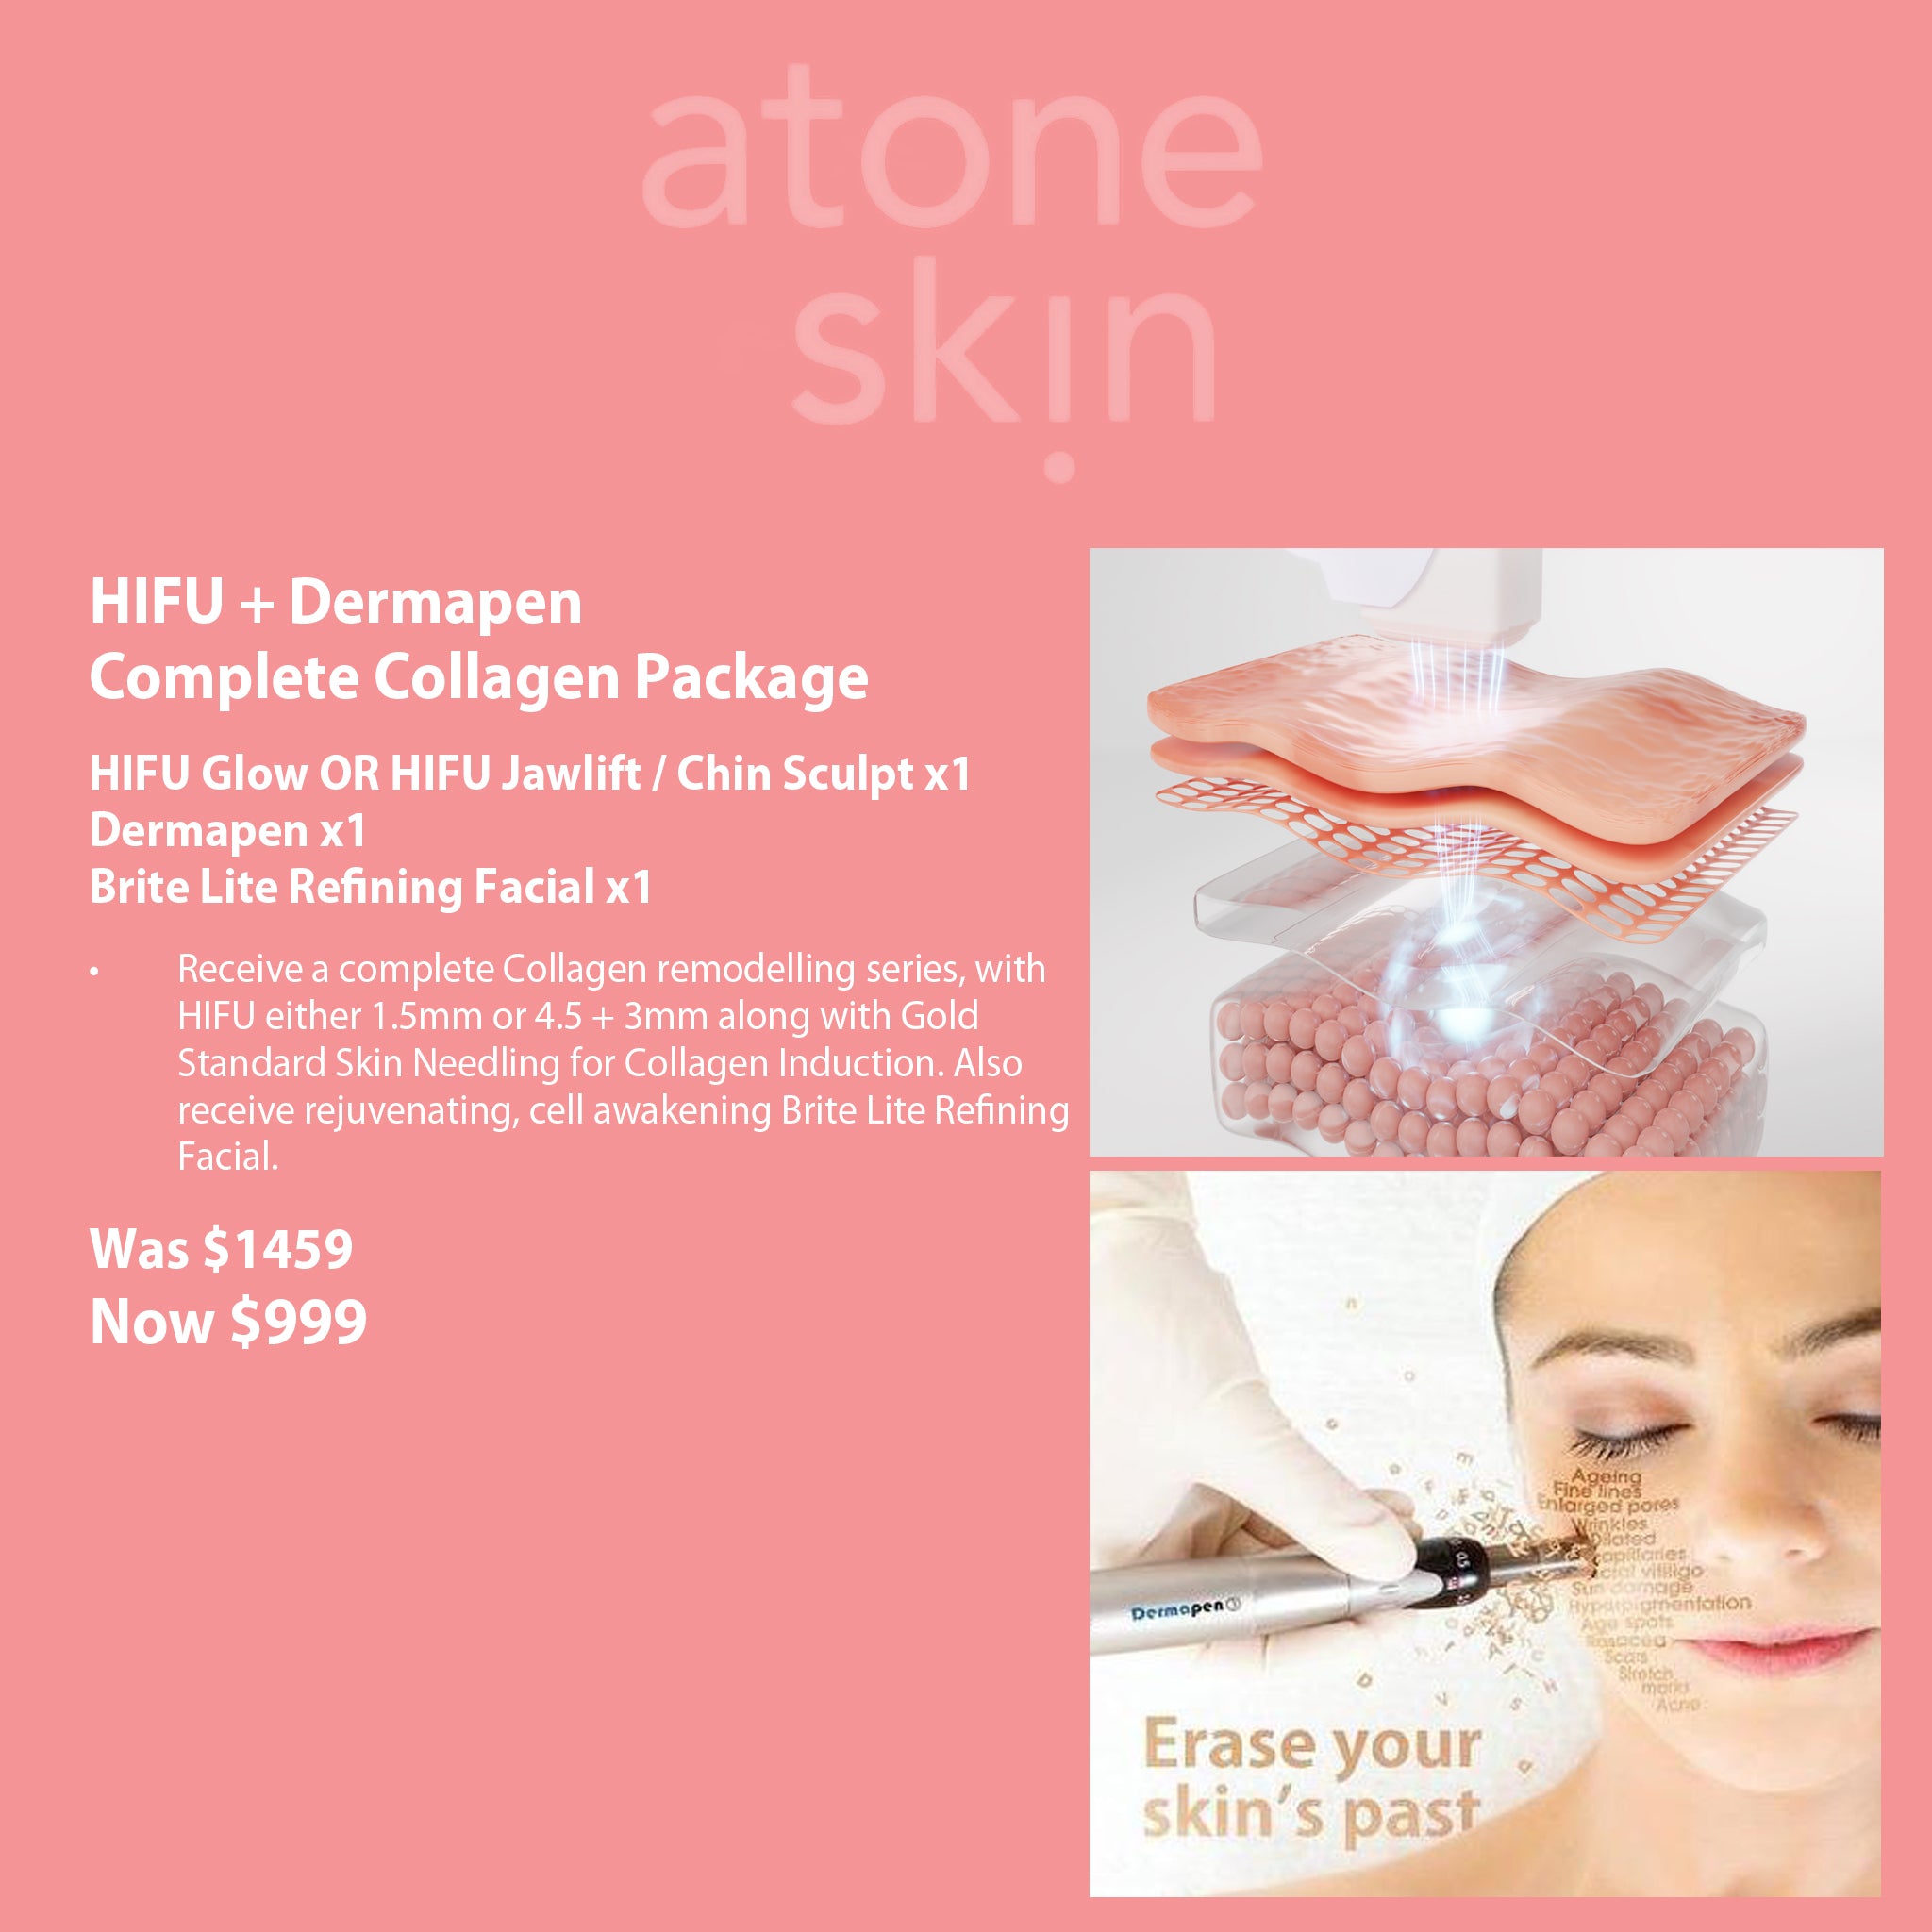 HIFU + Dermapen Complete Collagen Package